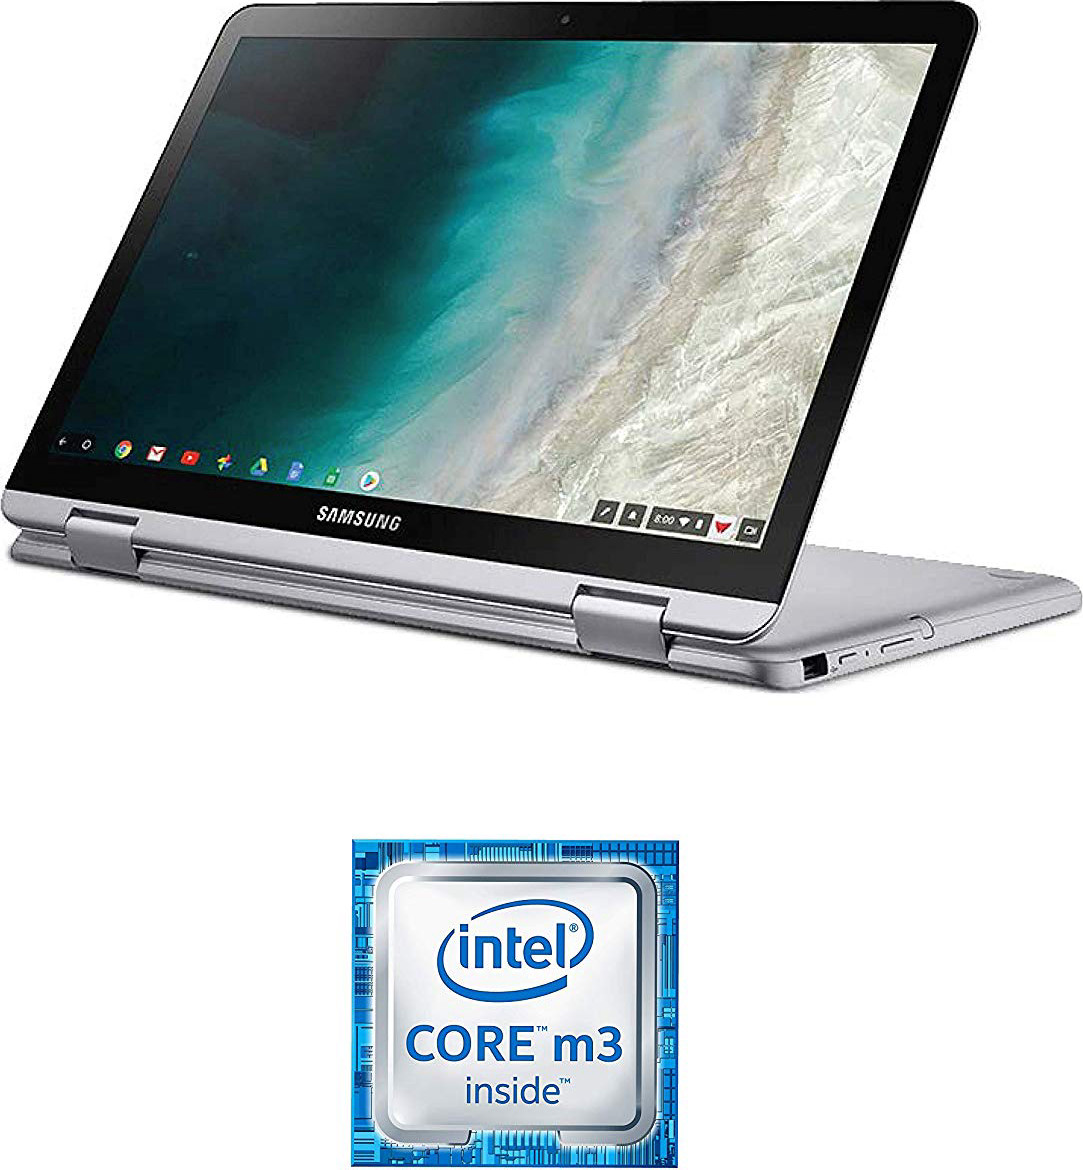 Samsung Chromebook Plus V2, 2-in-1, Intel Core m3, 4GB RAM, 64GB eMMC, 13MP Camera, Chrome OS, 12.2", 16:10 Aspect Ratio, Light Titan (XE520QAB-K02US)